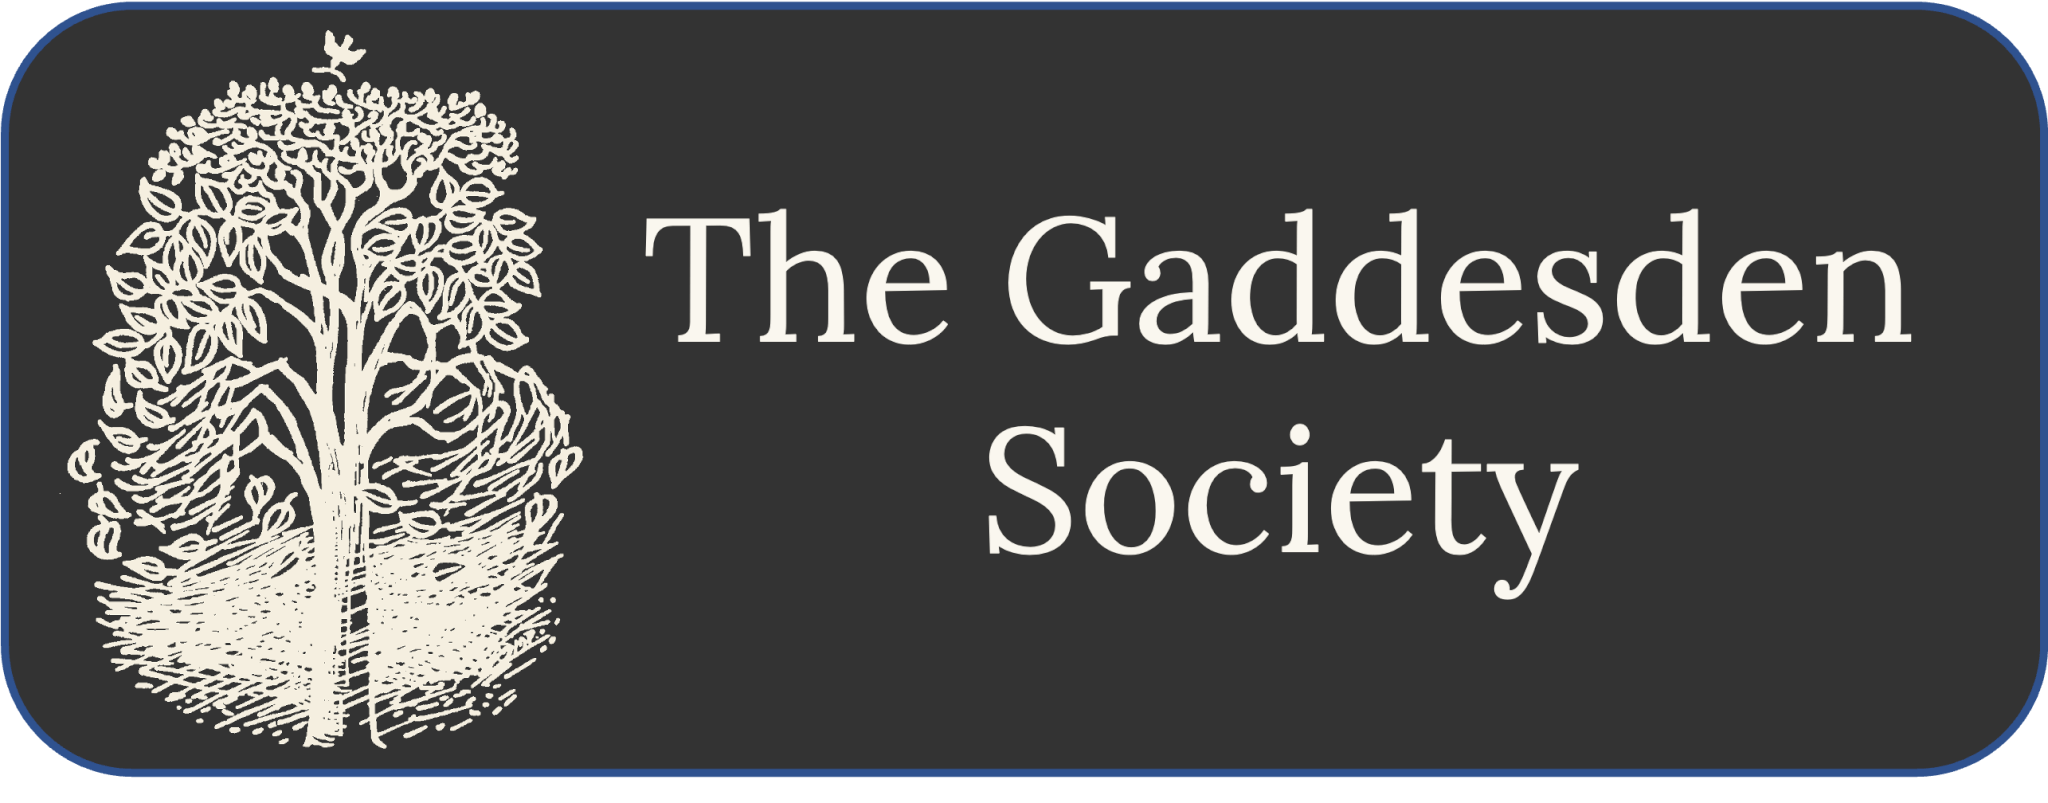 The Gaddesden Society Logo